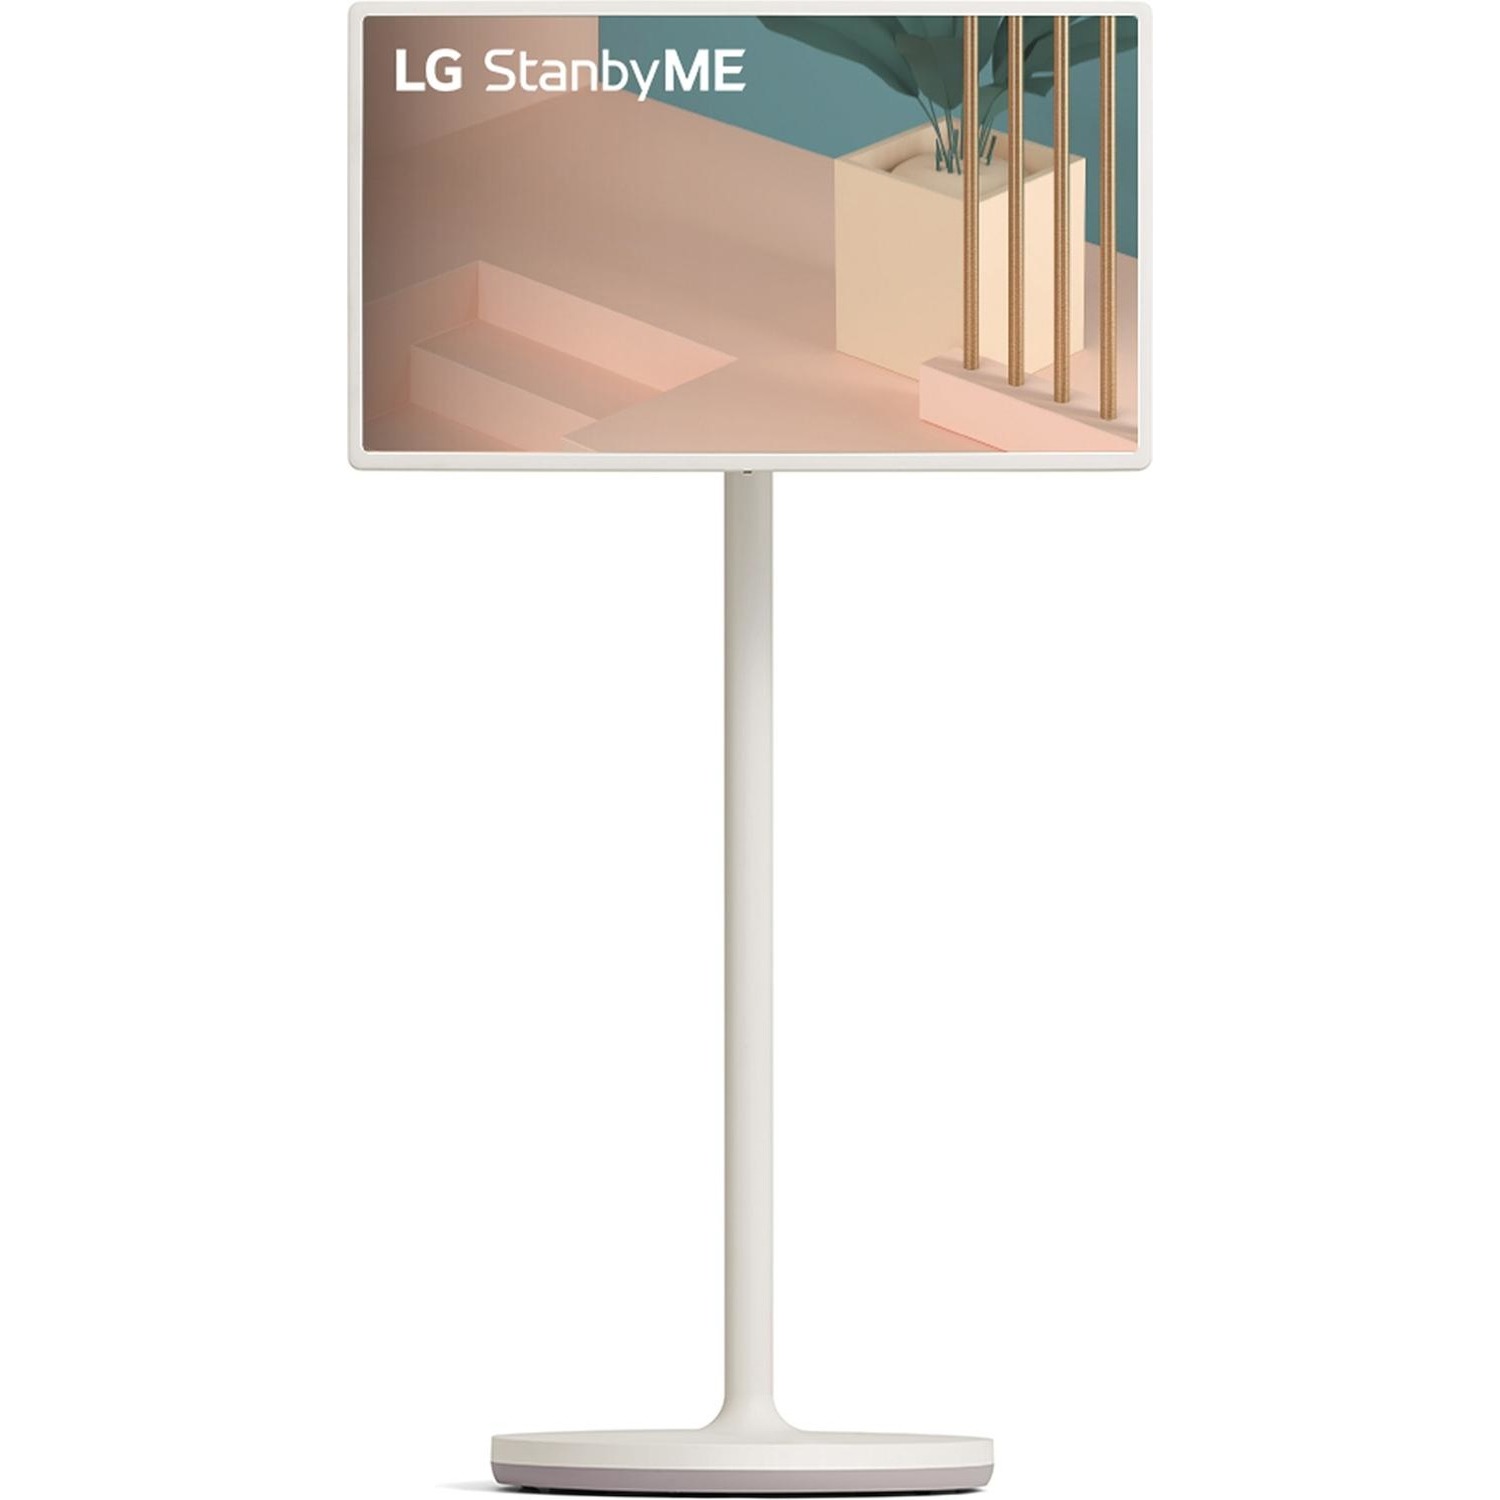 Immagine per LED Monitor Touch Smart LG 27ART10AKPL StanbyME da DIMOStore